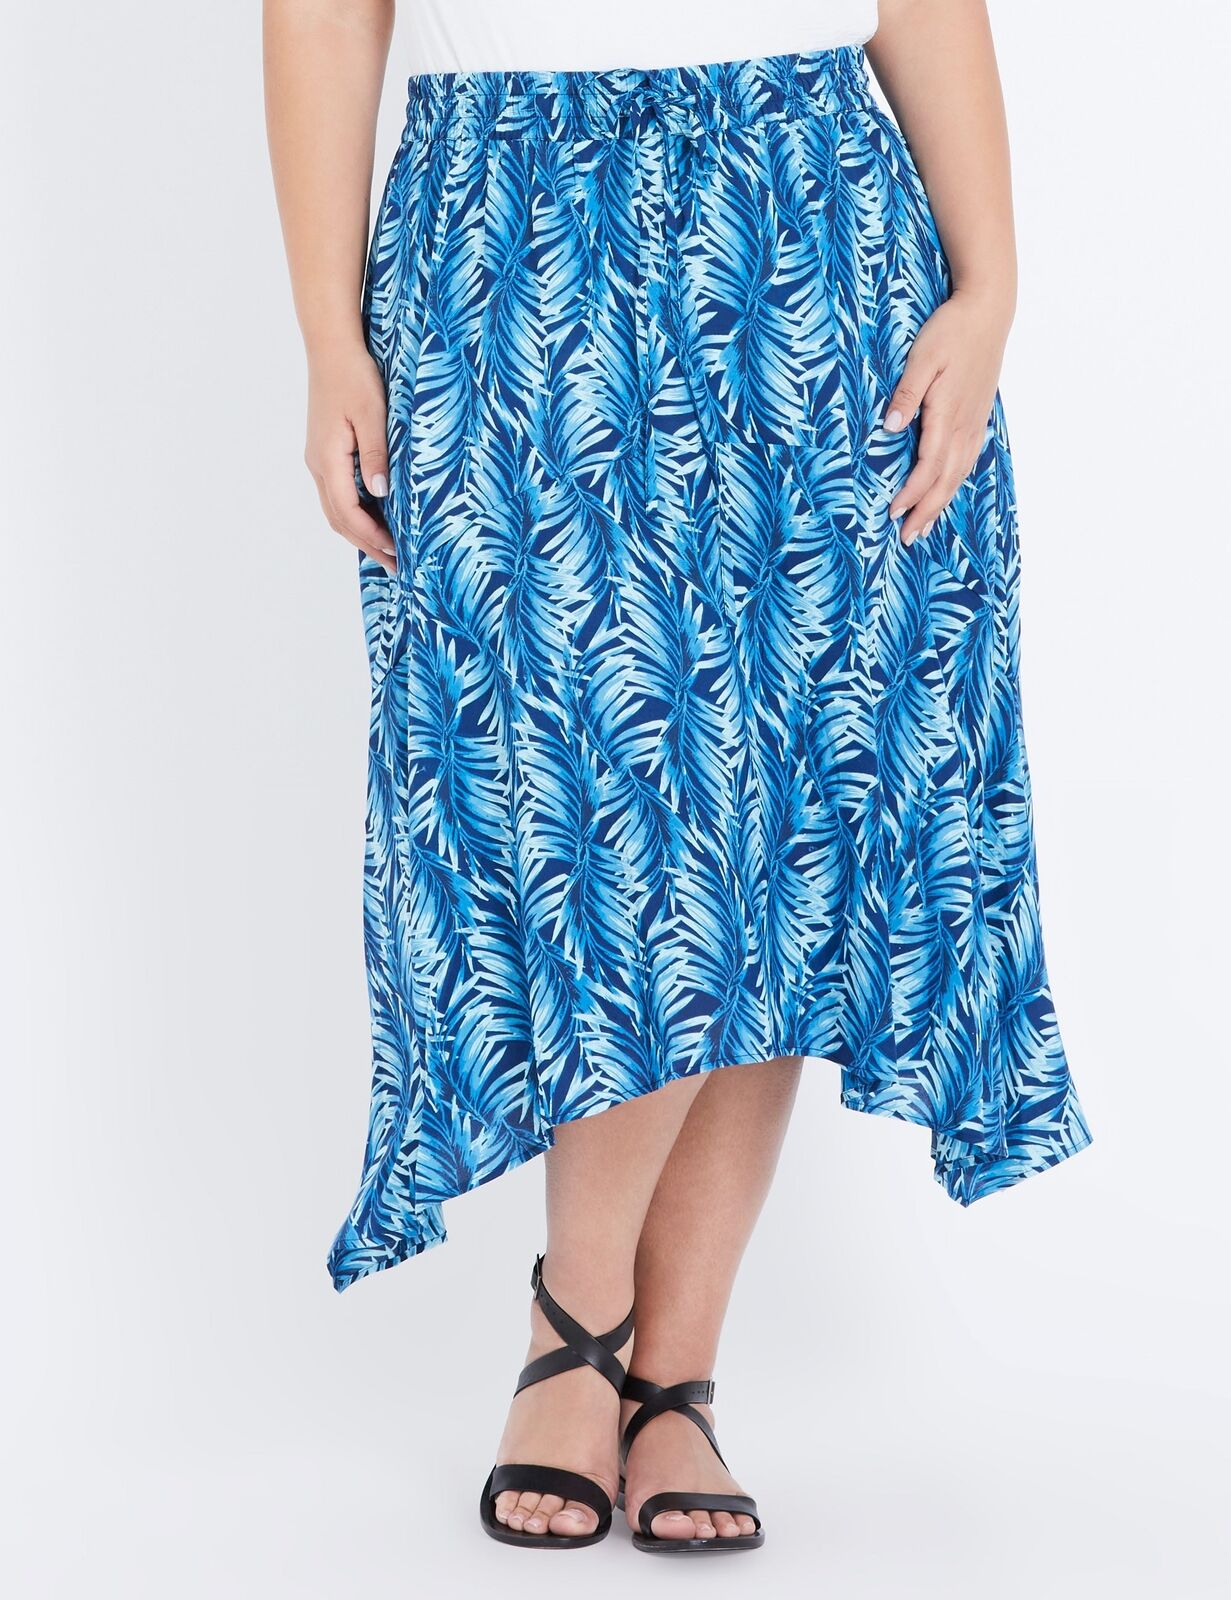 Plus Size - Womens Skirts - Midi - Summer - Blue - Casual Fashion | AUTOGRAPH